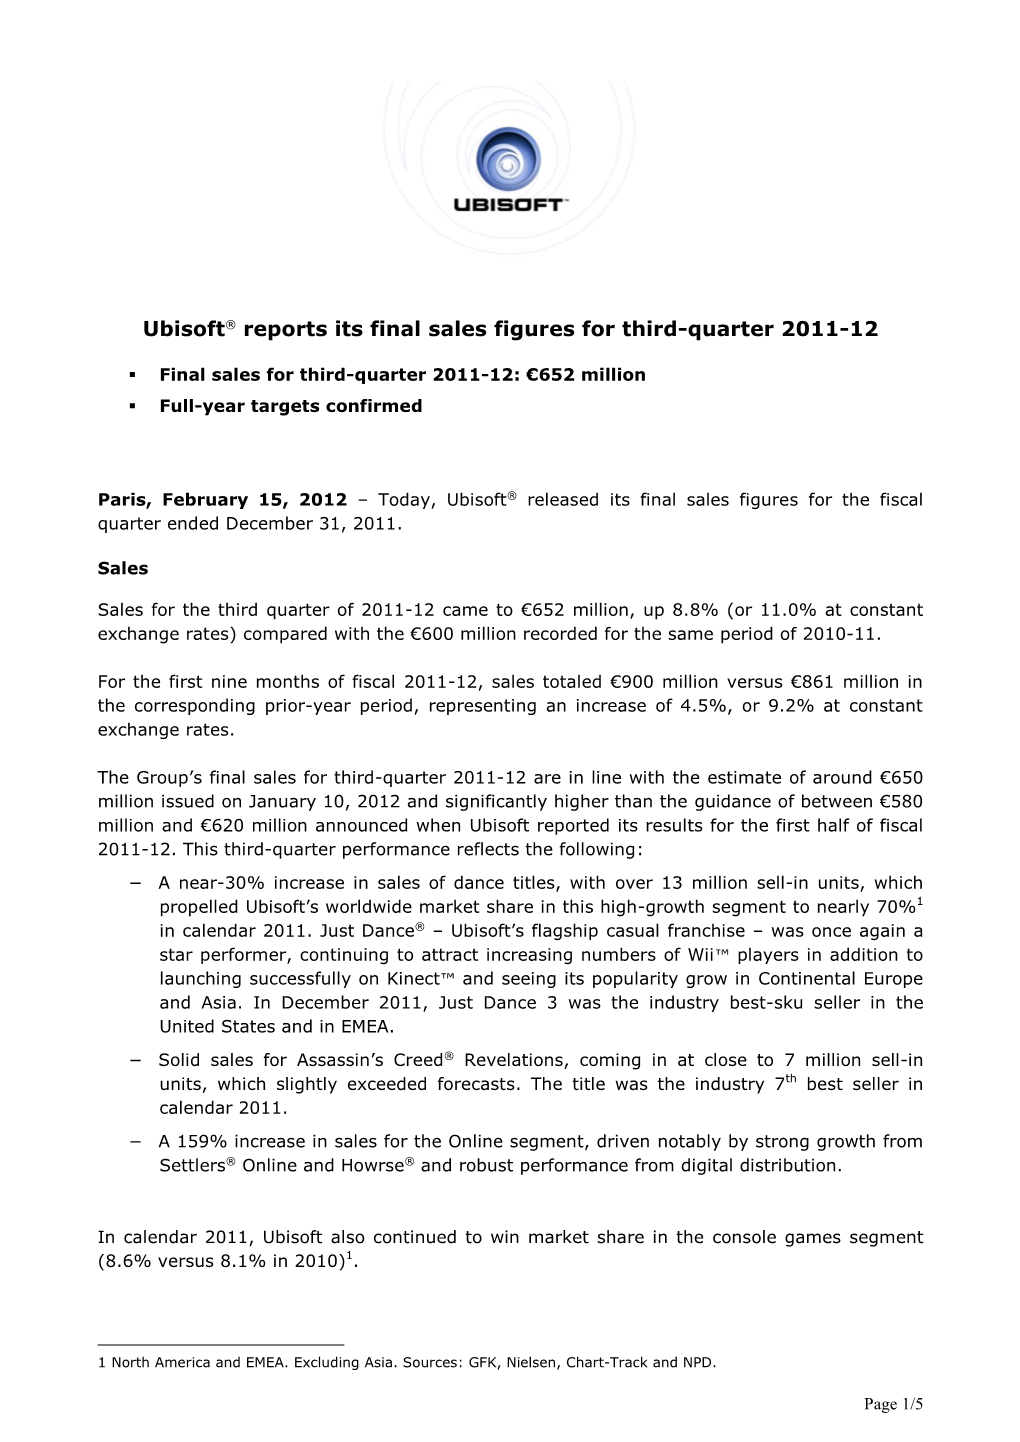 Ubisoft® Reports Its Final Sales Figures for Third-Quarter 2011-12